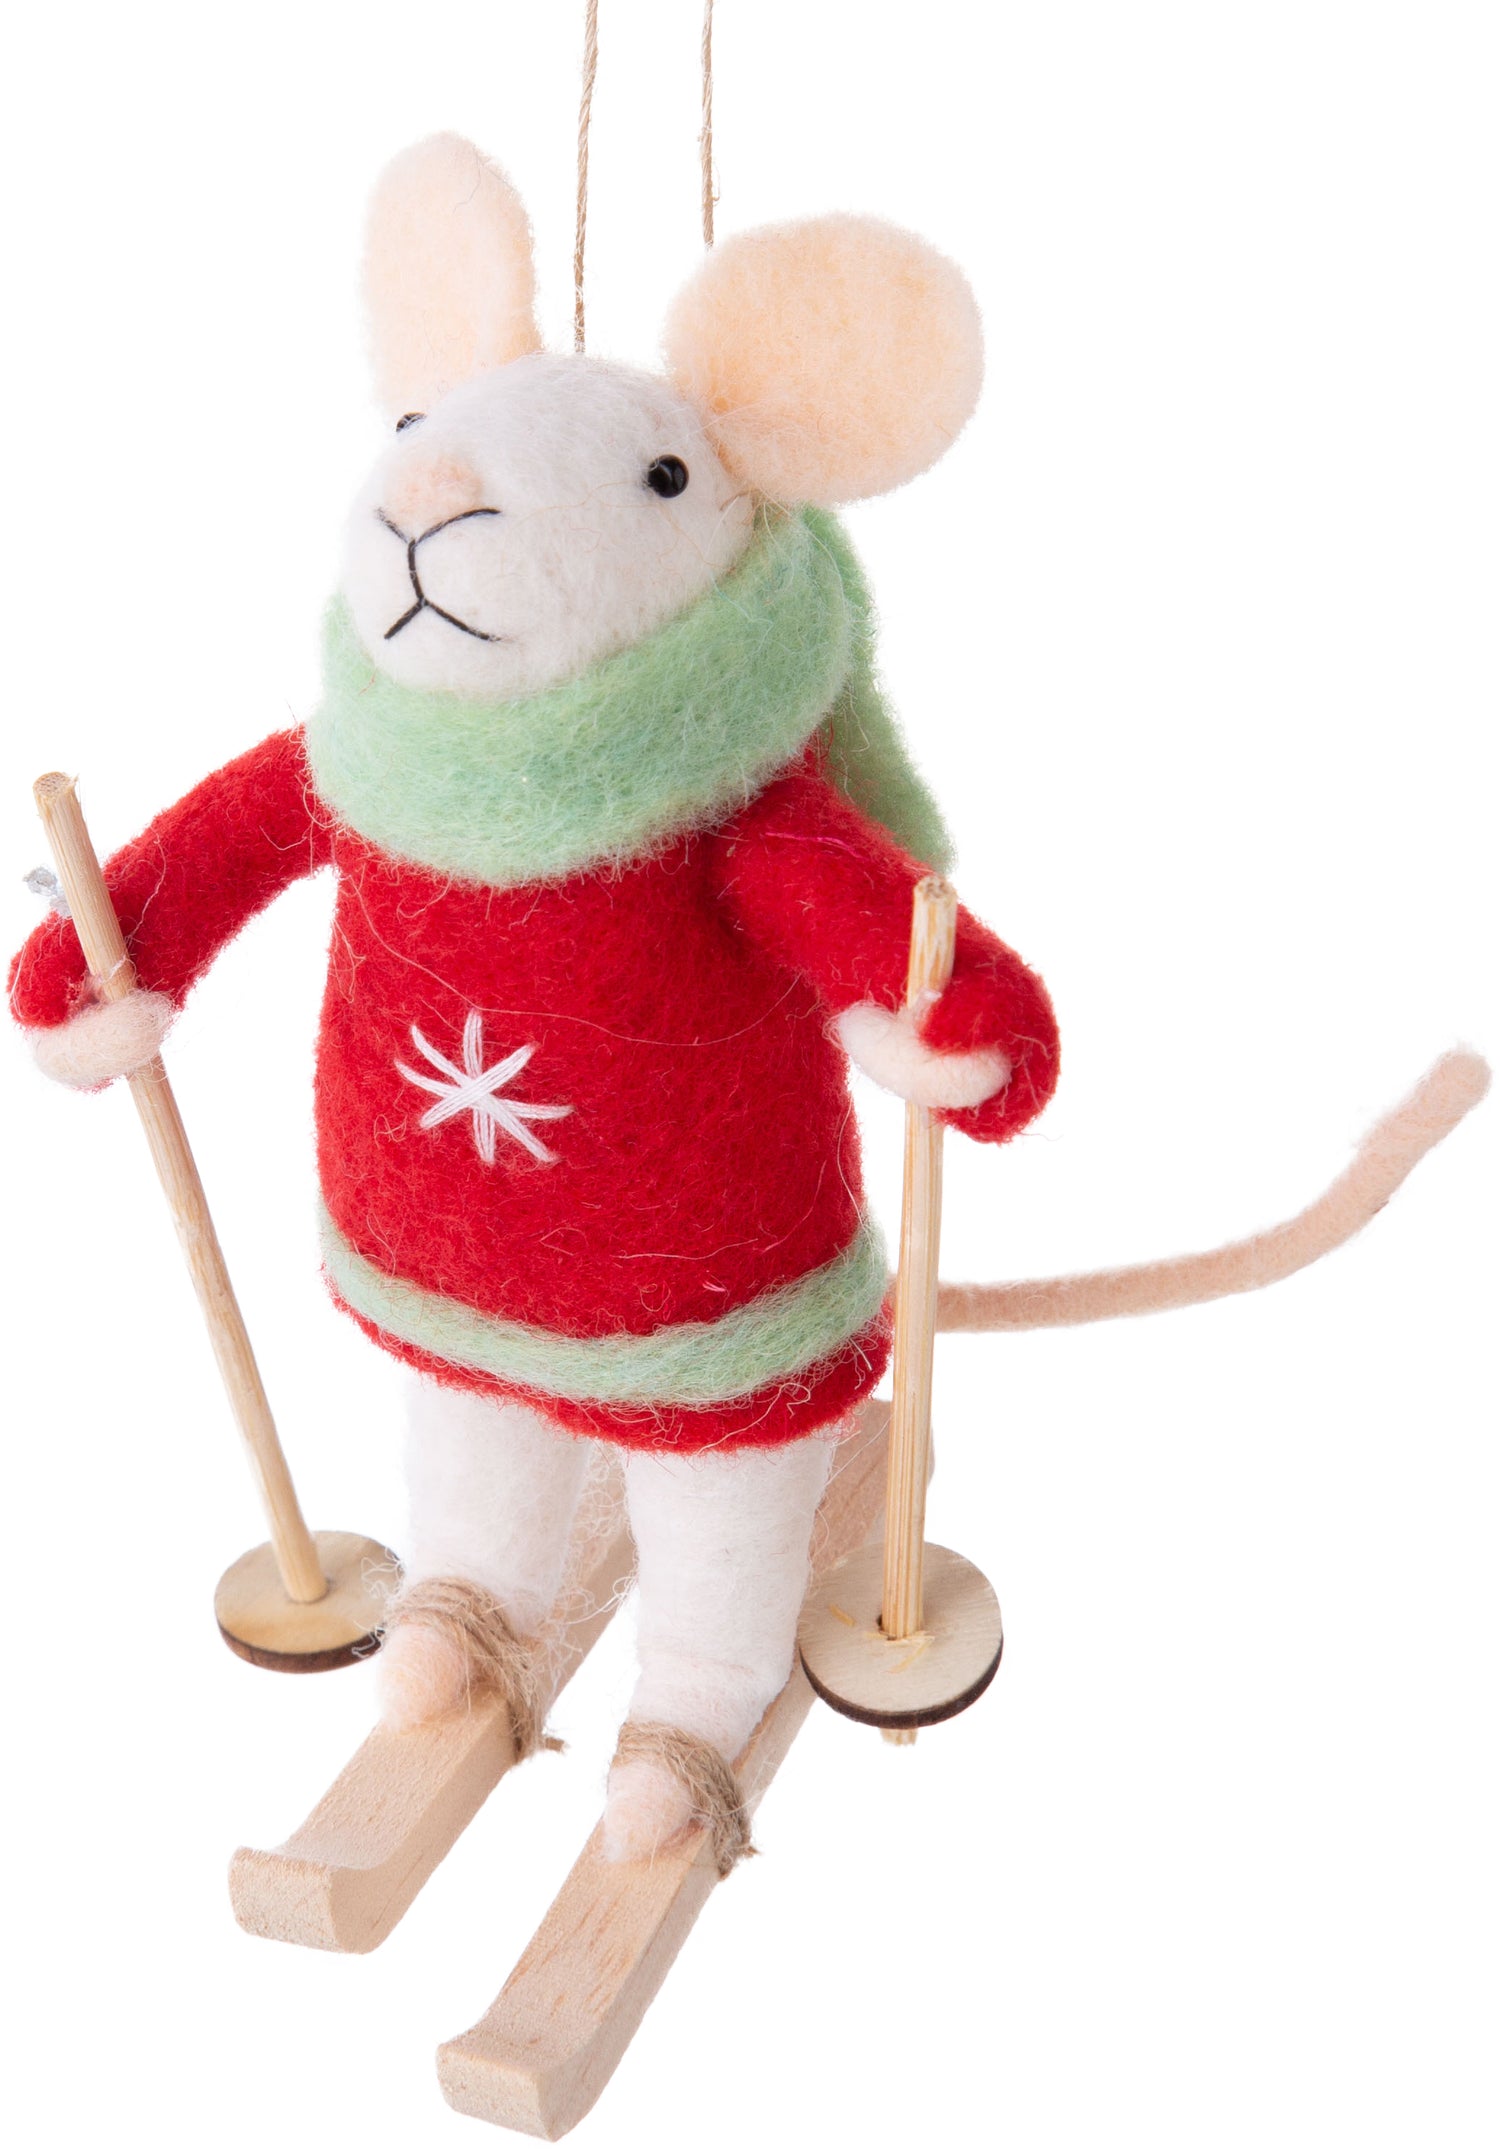 Felt Skiing Mouse Ornament